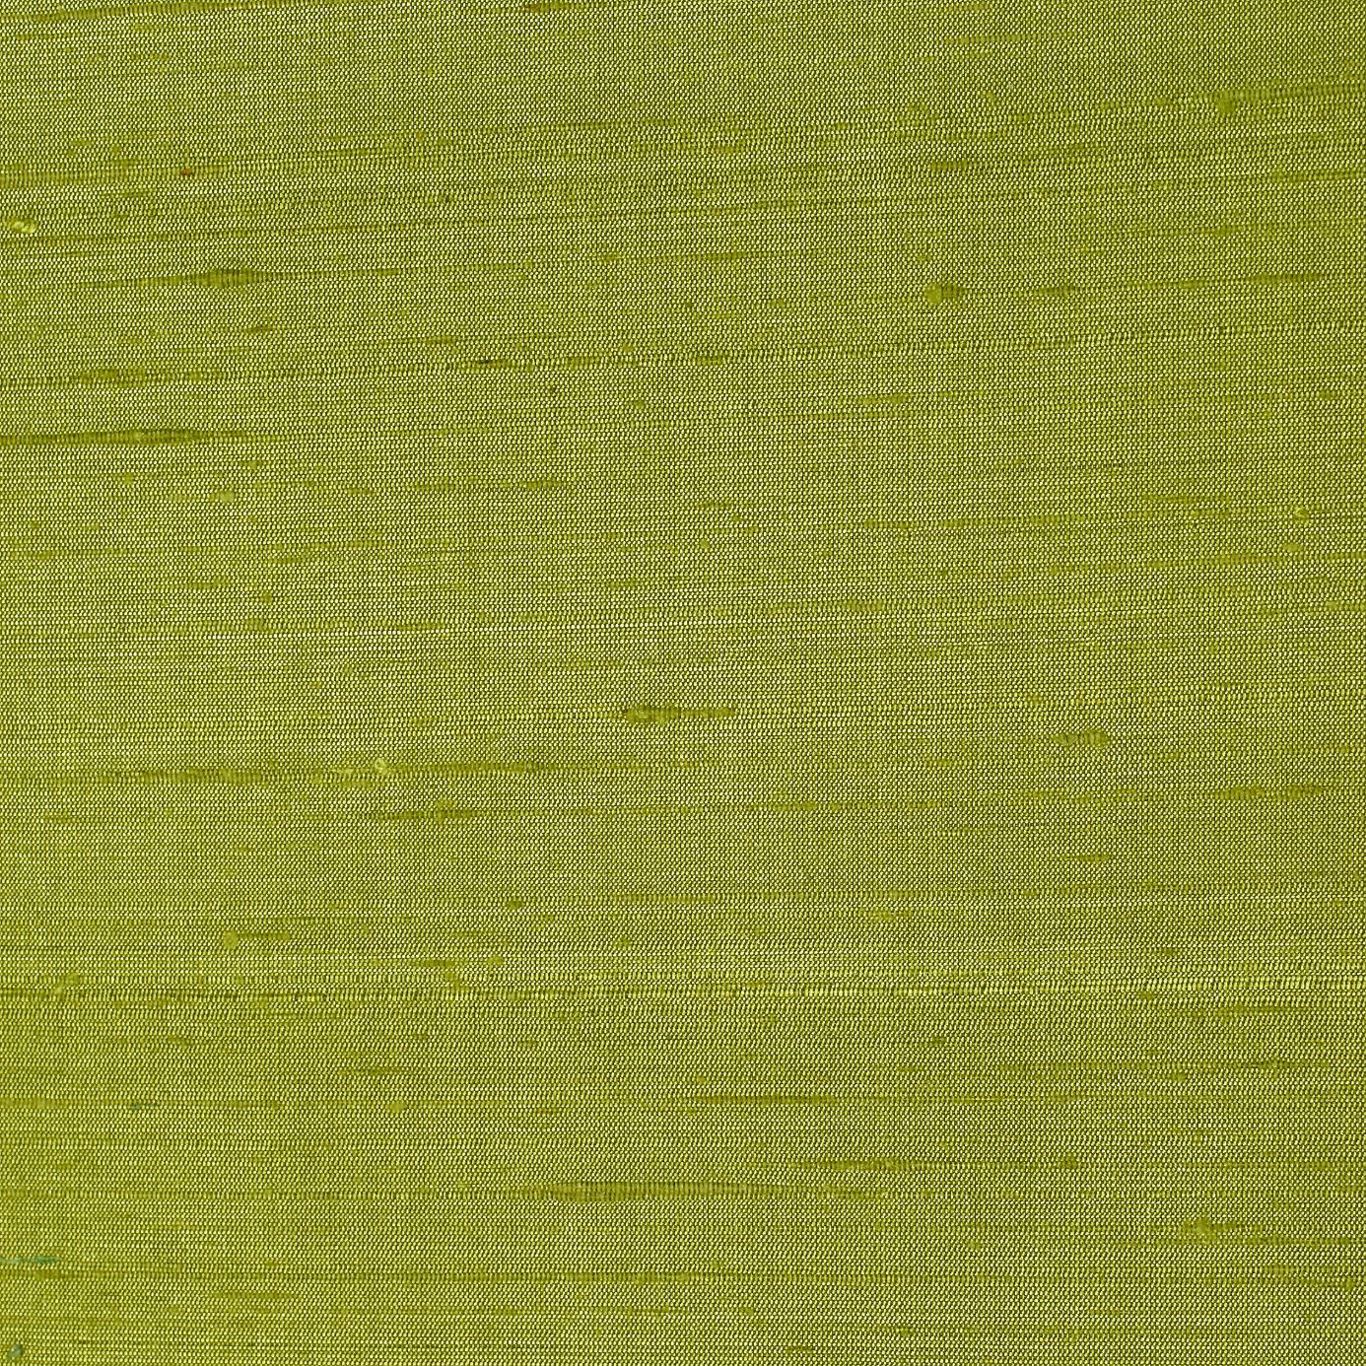 Lilaea Silks Meadow Fabric by HAR